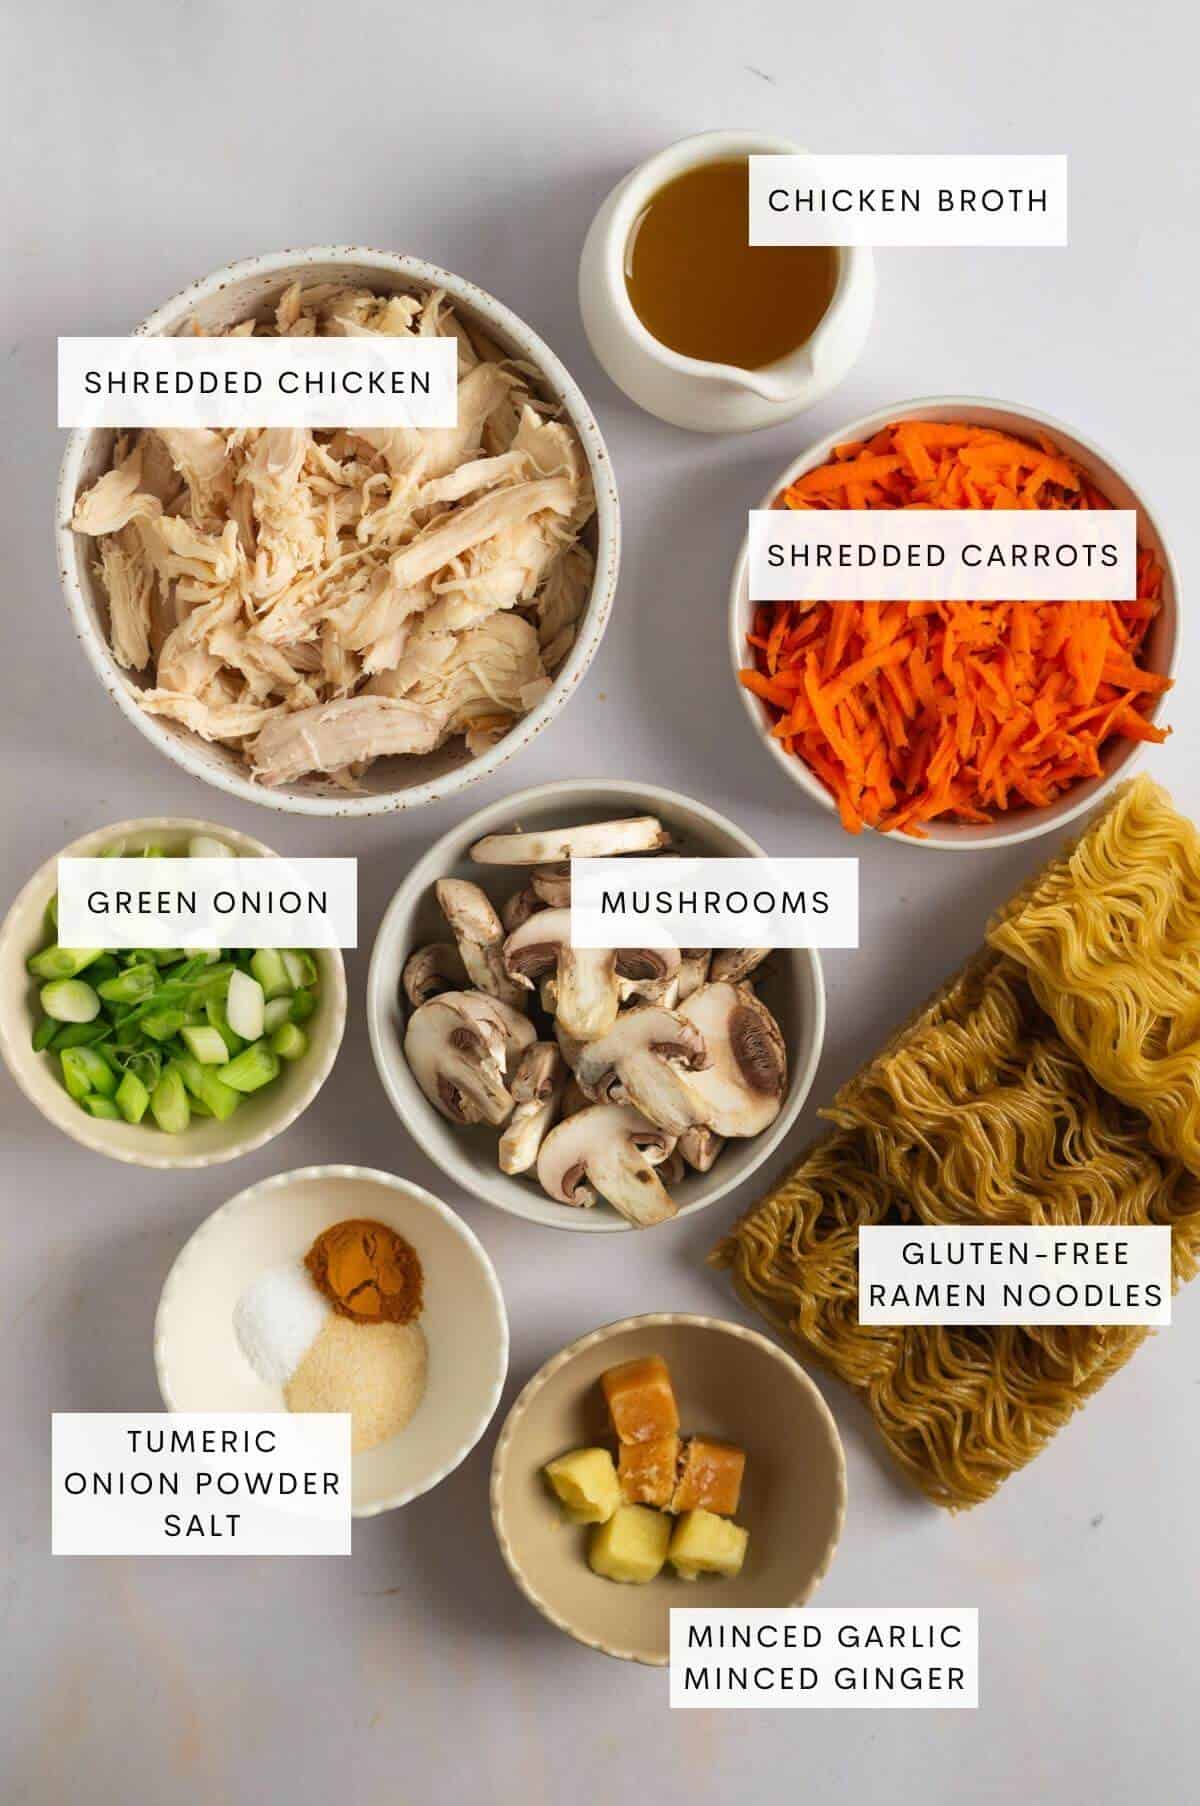 Shredded chicken, chicken broth, shredded carrots, green onion, mushrooms, gluten-free ramen noodles, tumeric, onion powder, salt, minced garlic, minced ginger, and gluten-free ramen noodles.